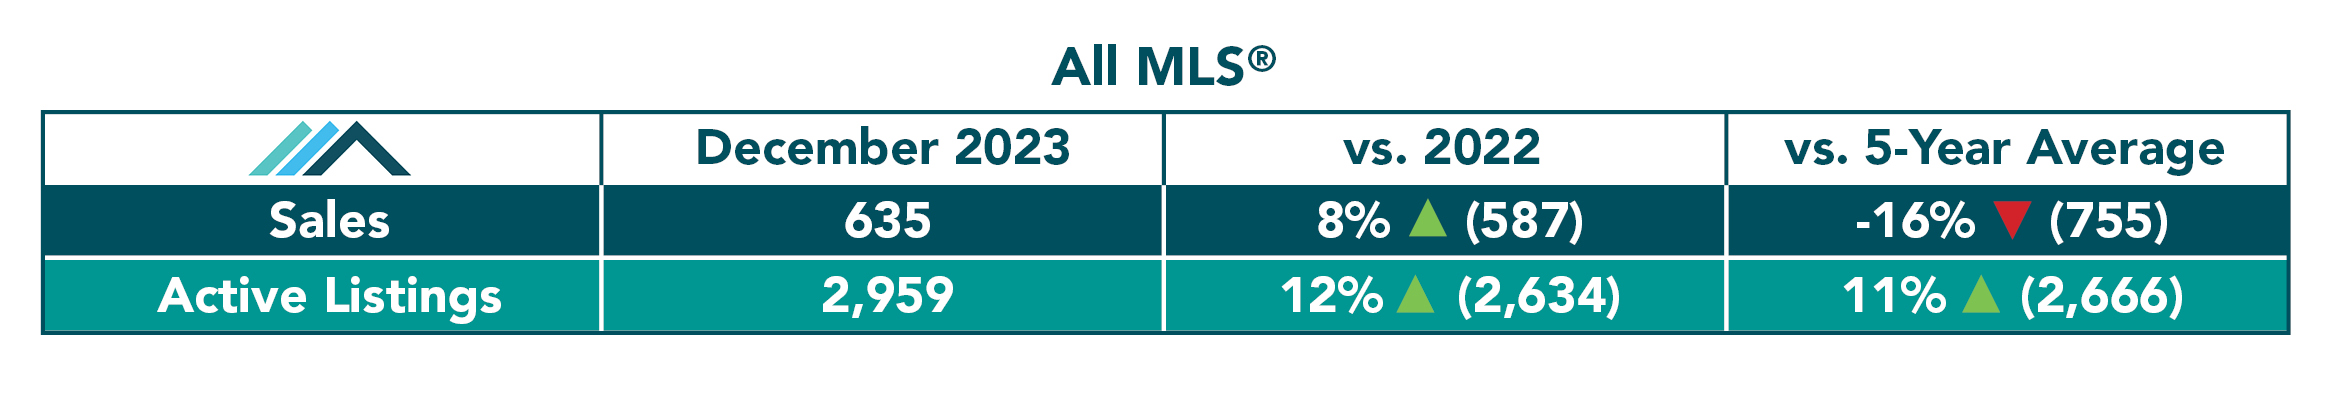 All MLS Table December 2023.jpg (313 KB)